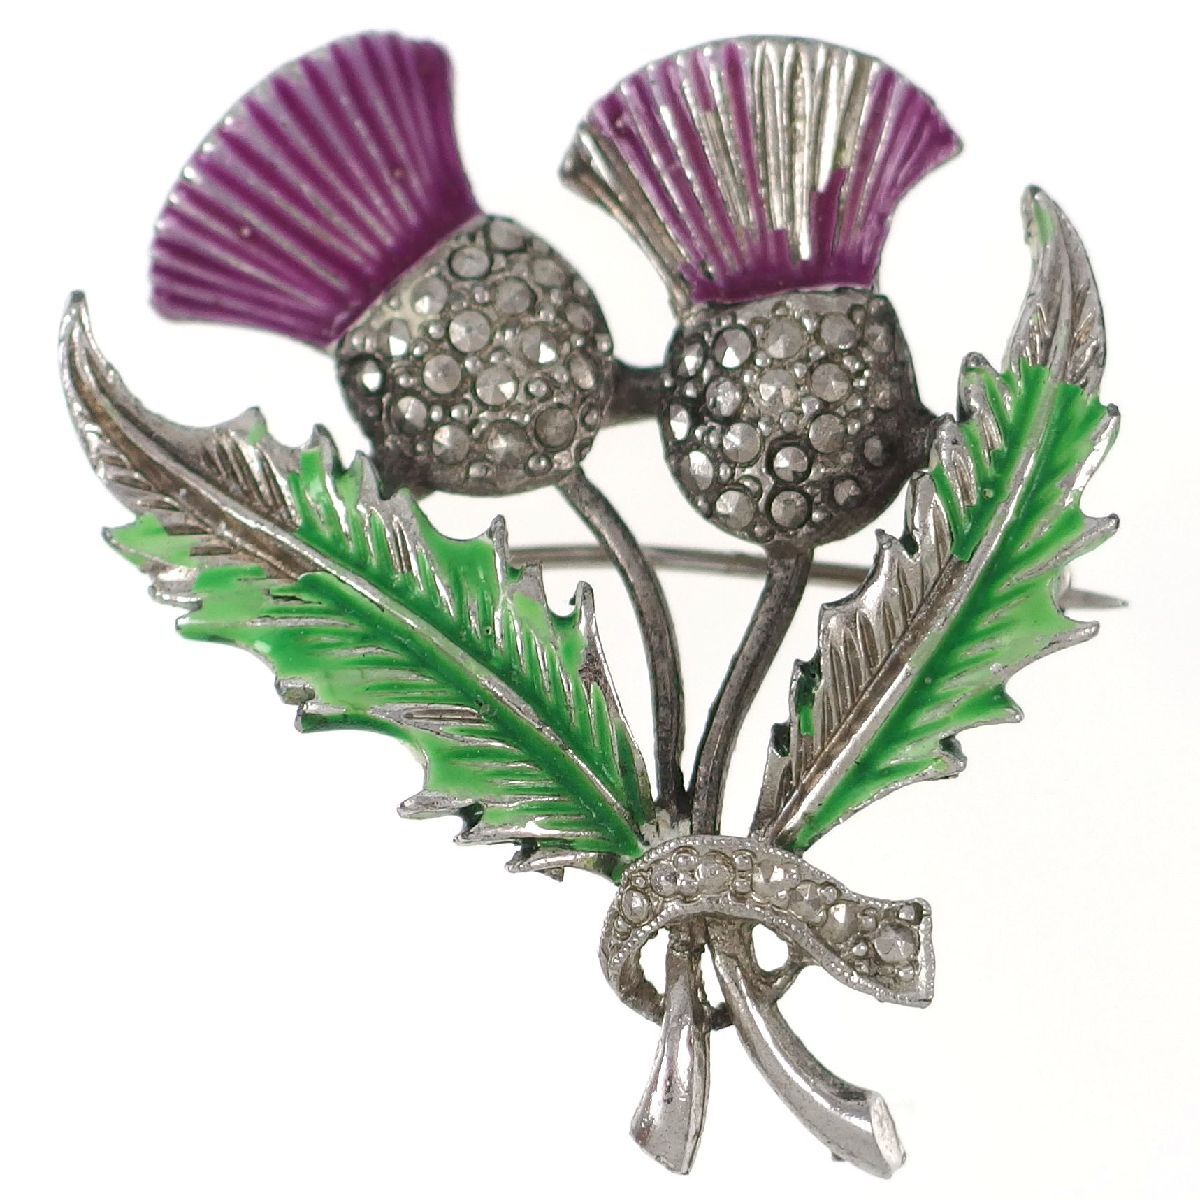 UK1532*a The mi. flower 2 wheel flower motif Celt England Britain Vintage brooch *